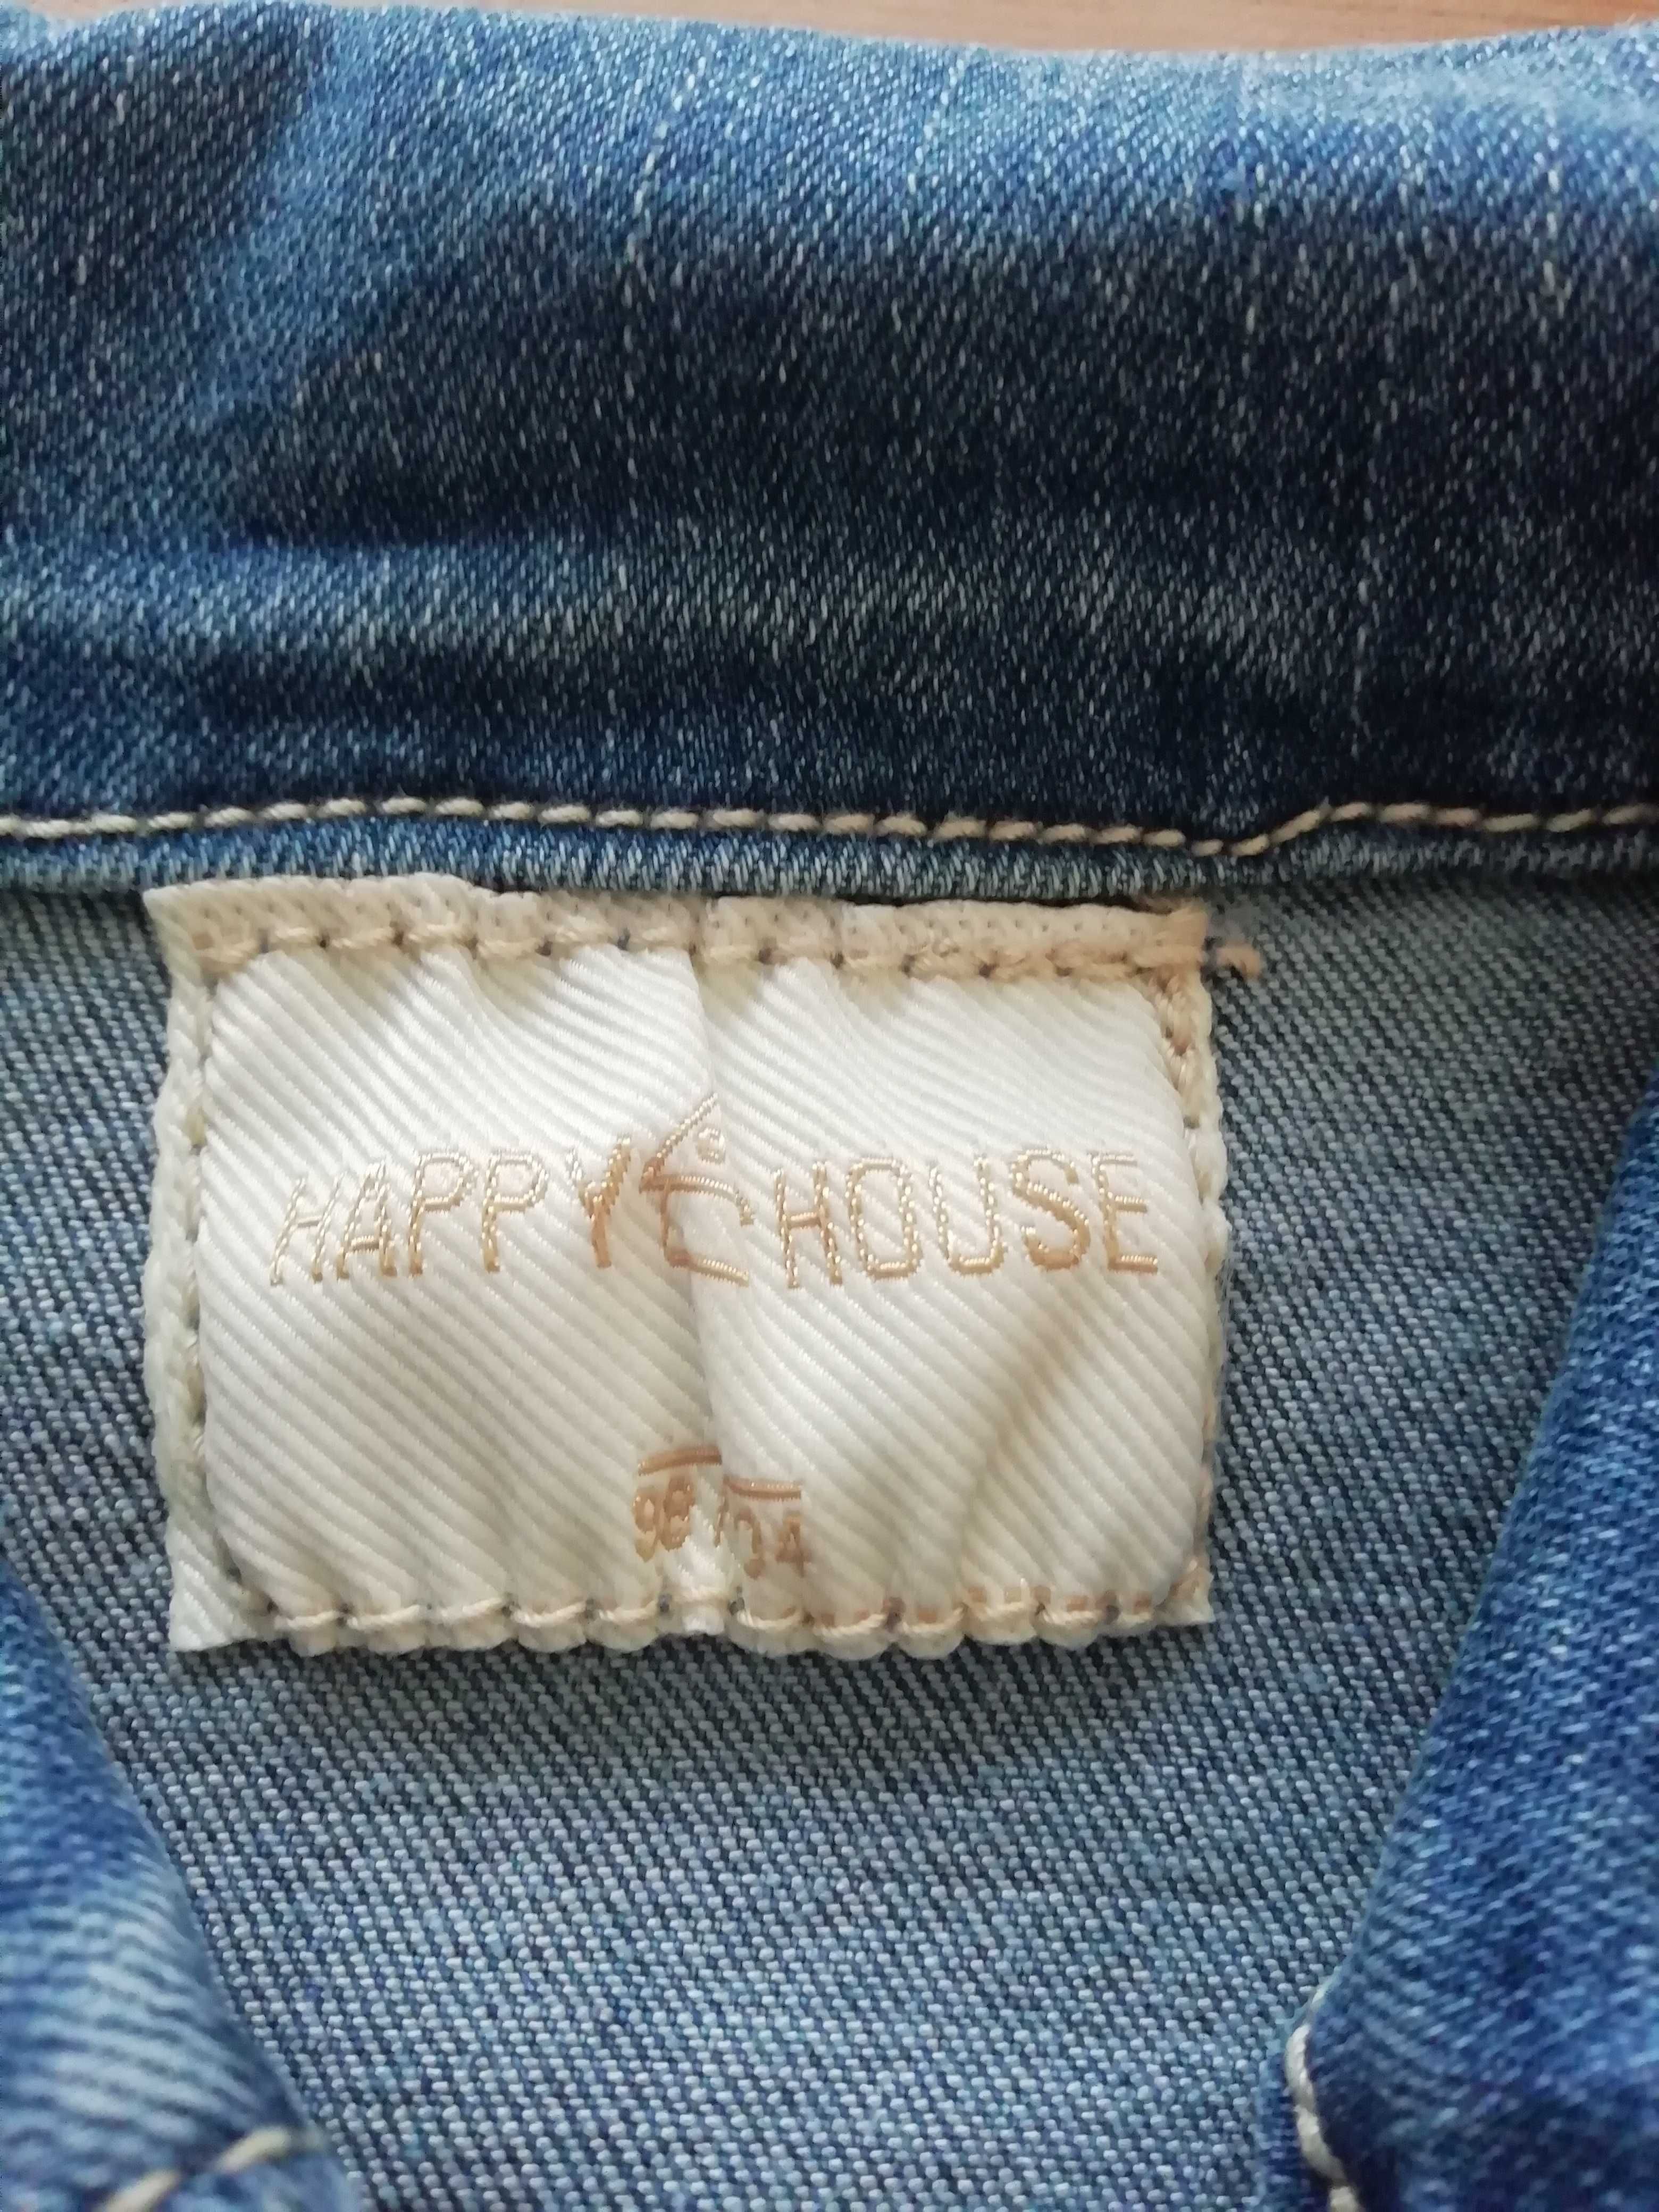 Kurtka jeansowa Happy House r. 98/104 4 lata jak nowa